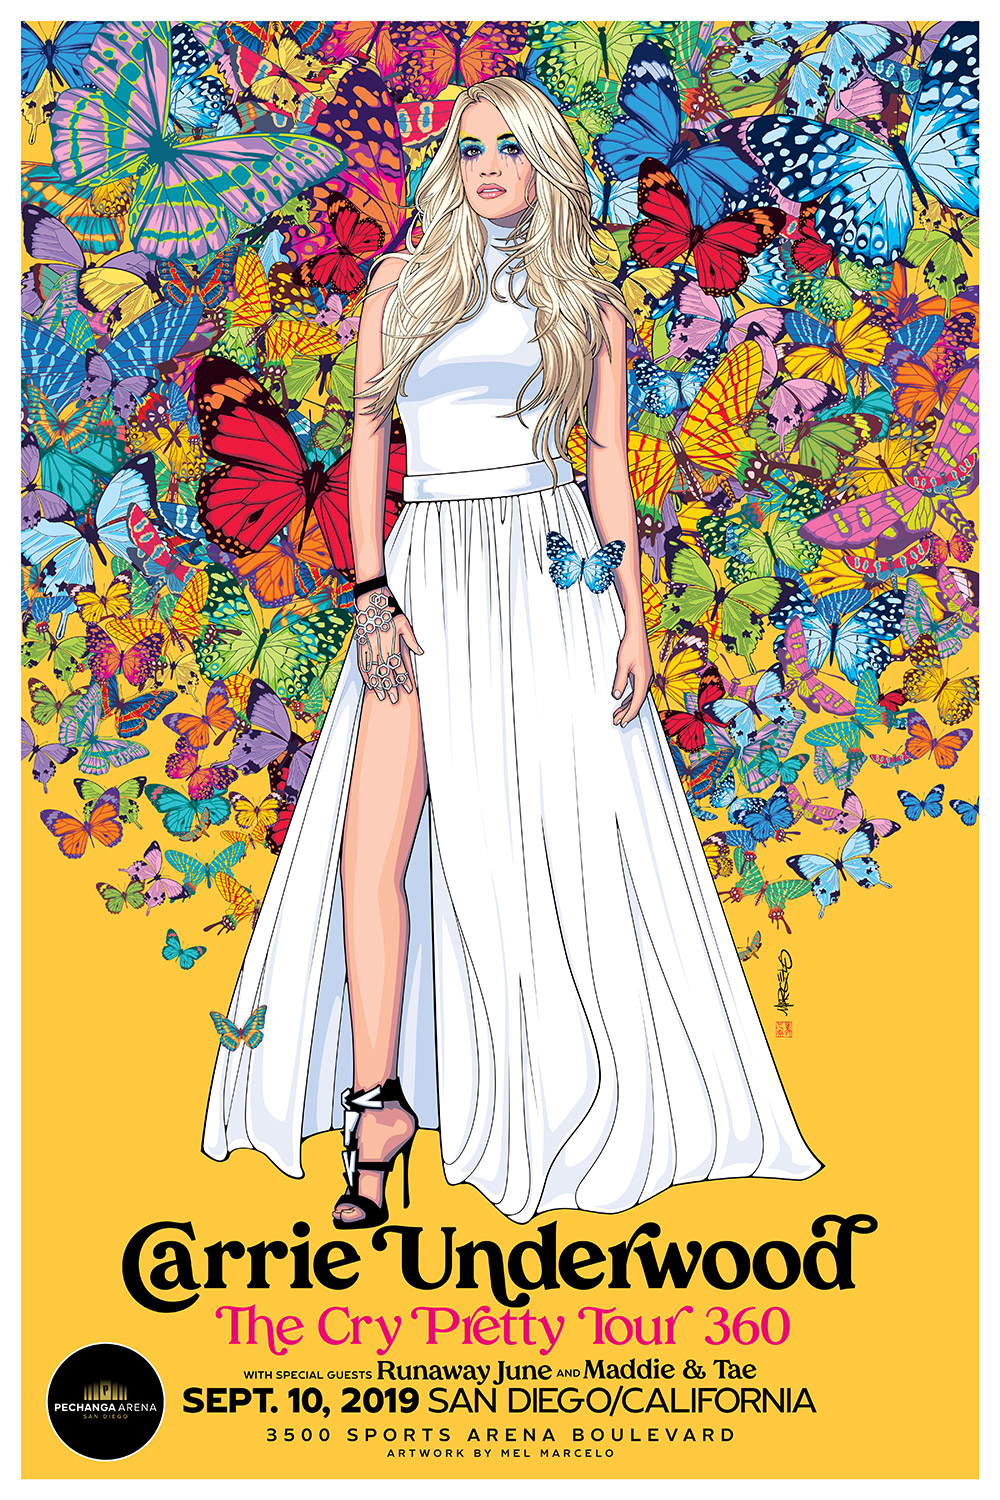 Carrie Underwood illustration by Mel Marcelo